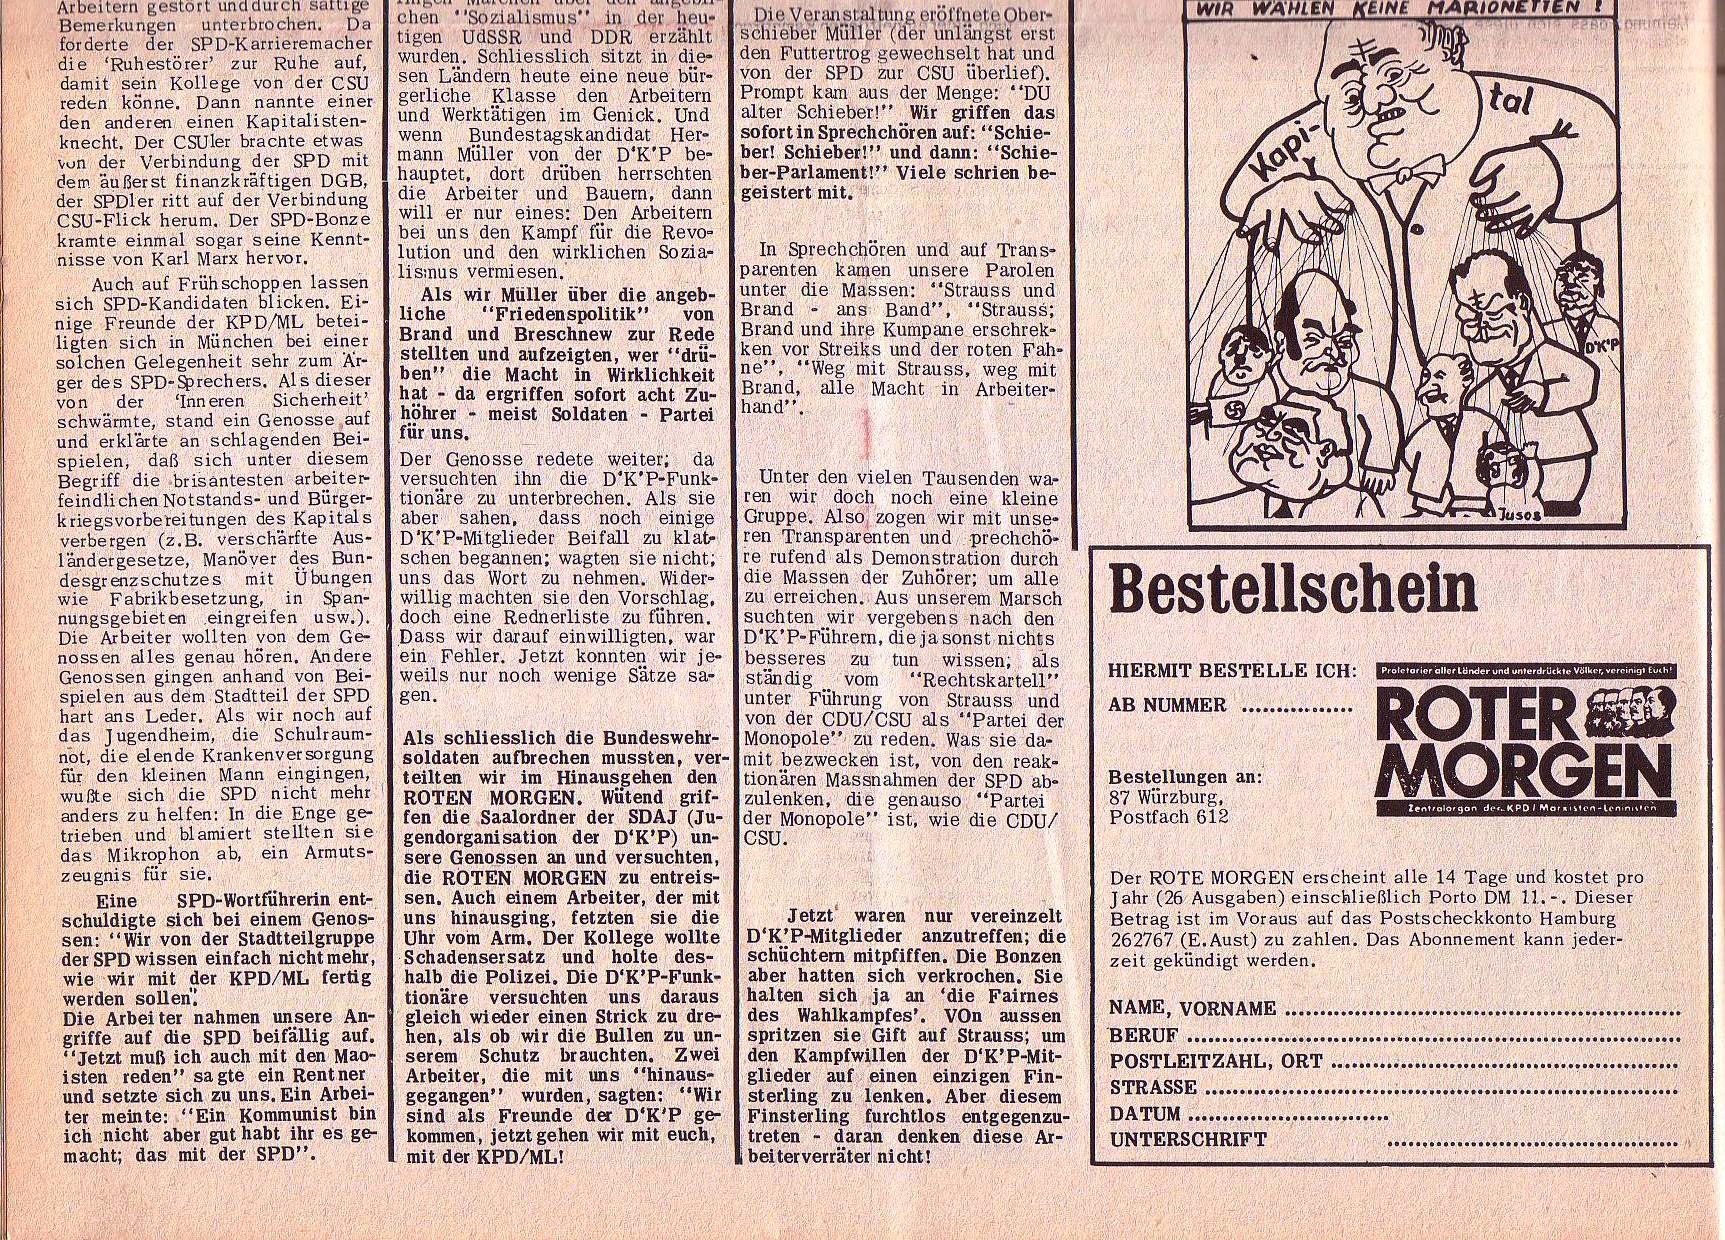 Roter Morgen, 6. Jg., 20. November 1972, Nr. 23, Seite 8b